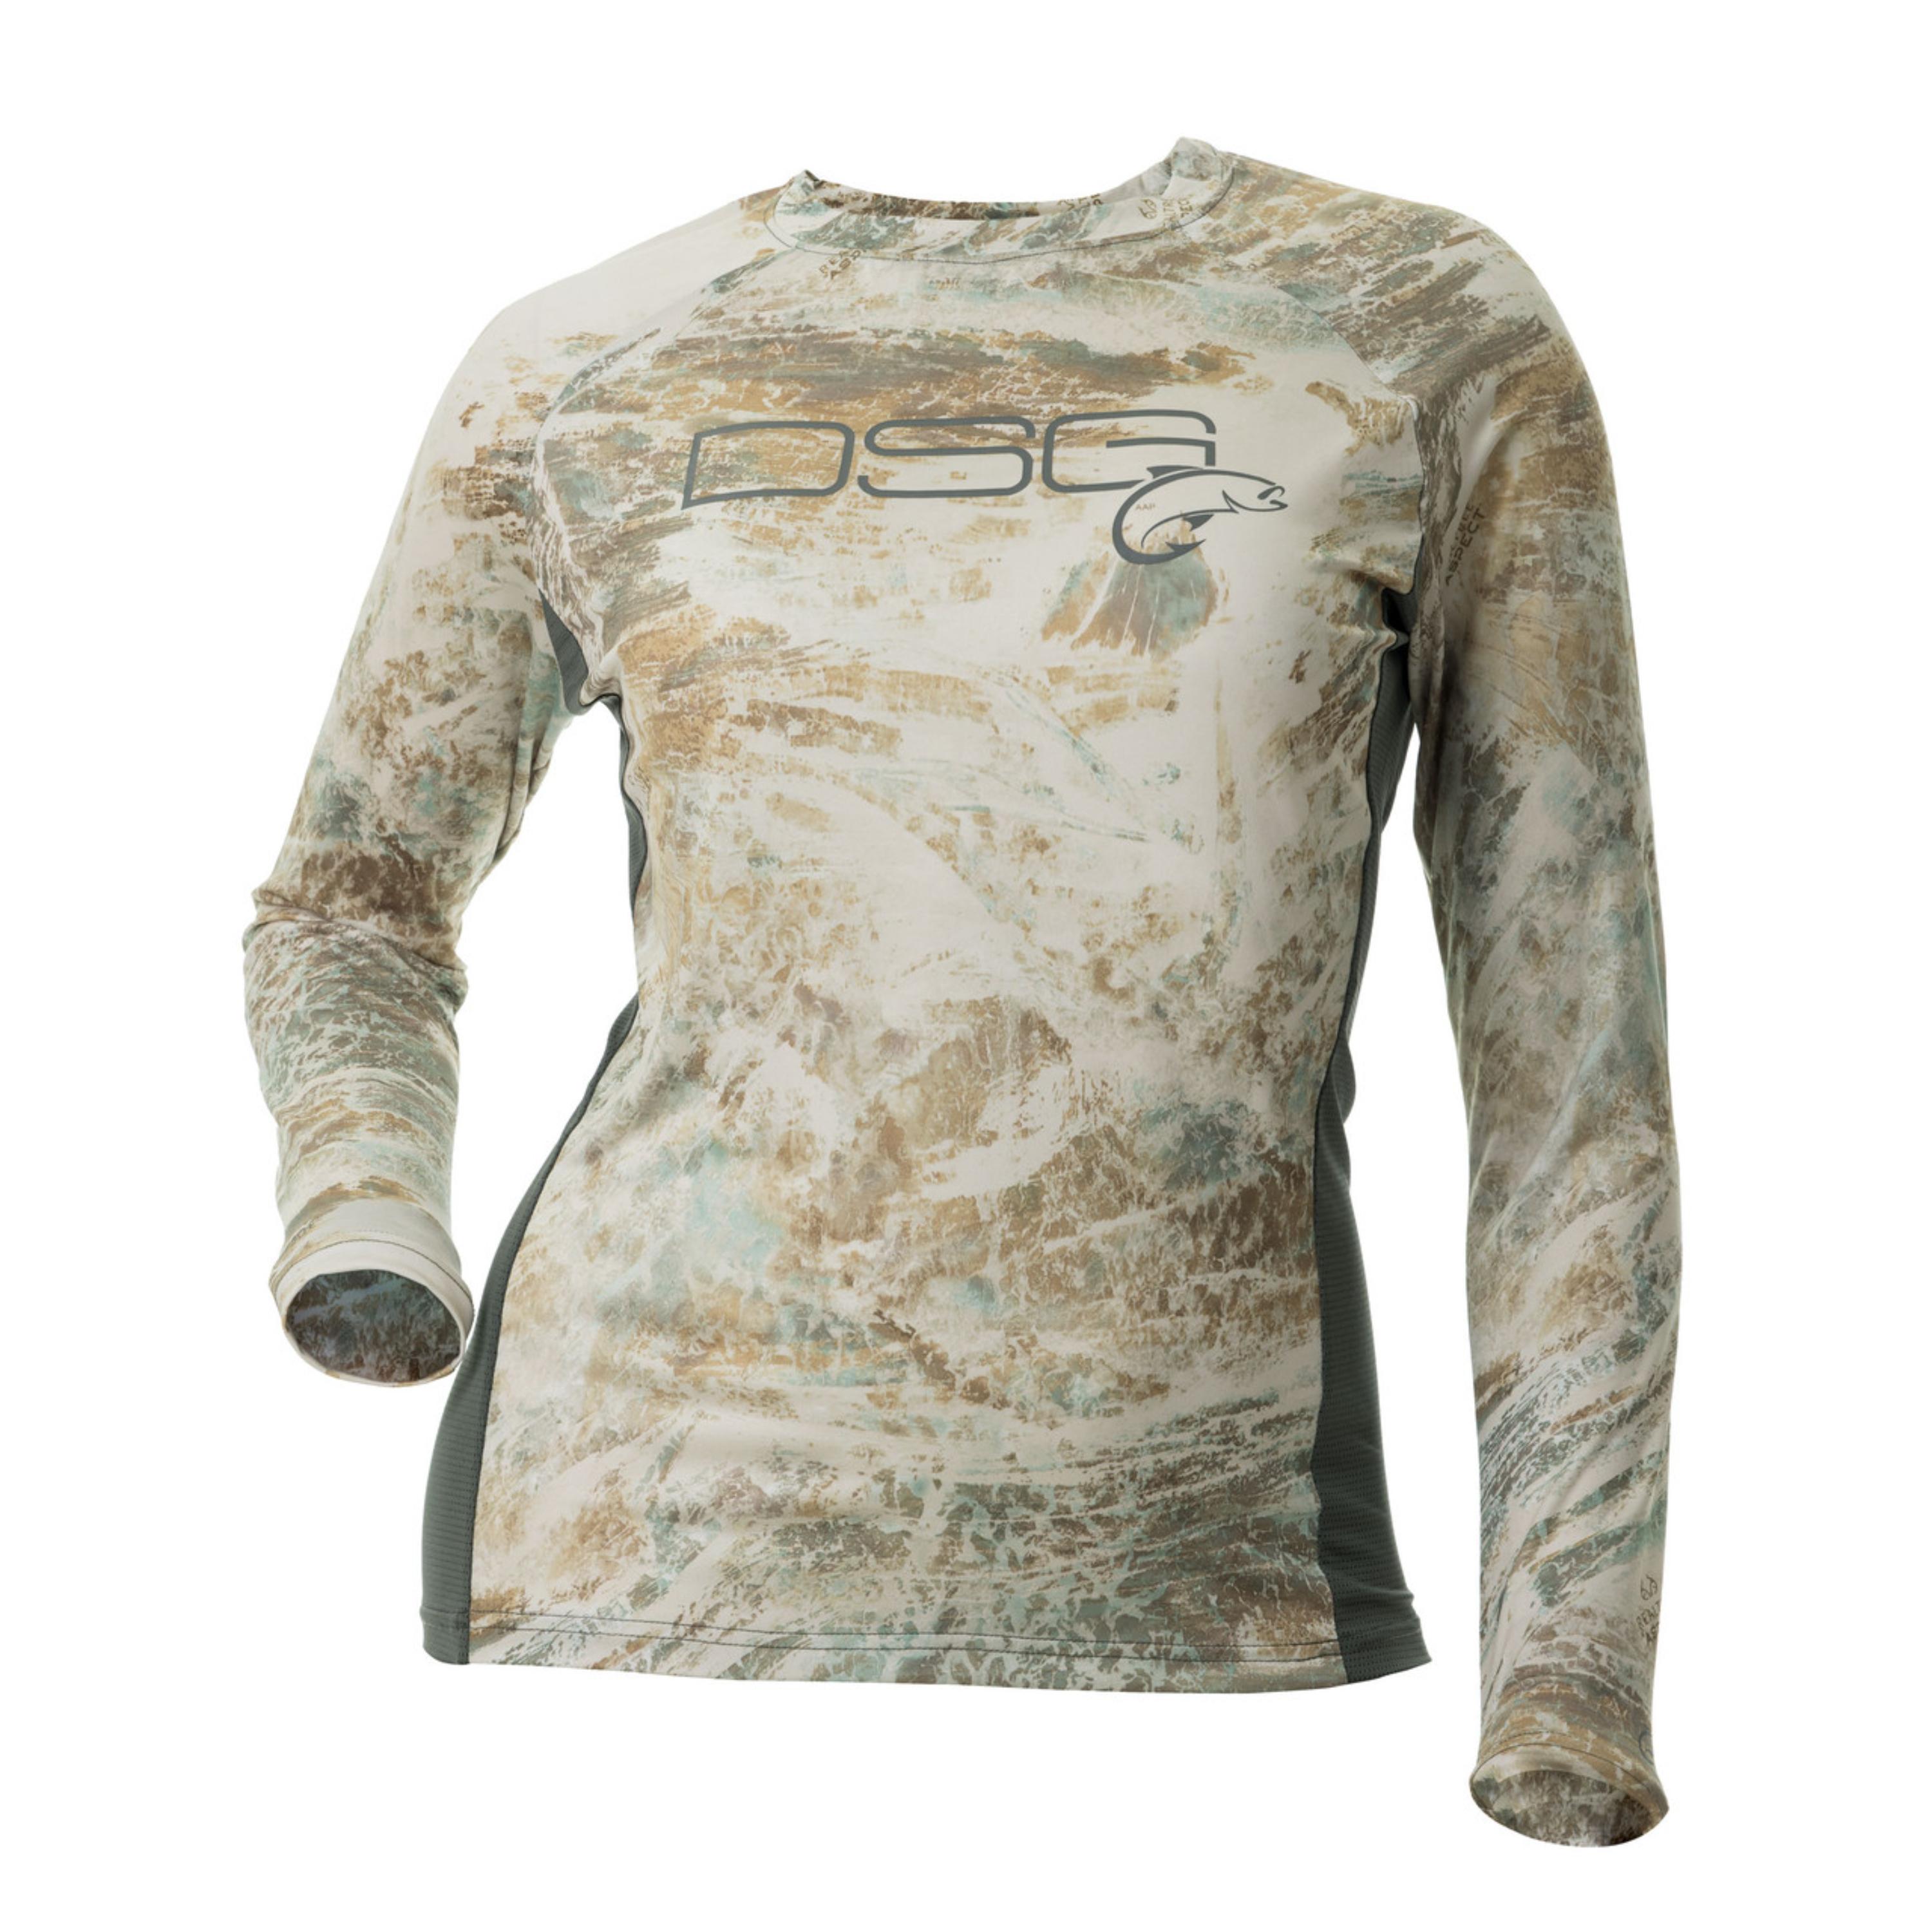 DSG Outerwear Sydney Long Sleeve Shirt - Realtree Aspect Key West/sage, Women's, Size: Small, Beige